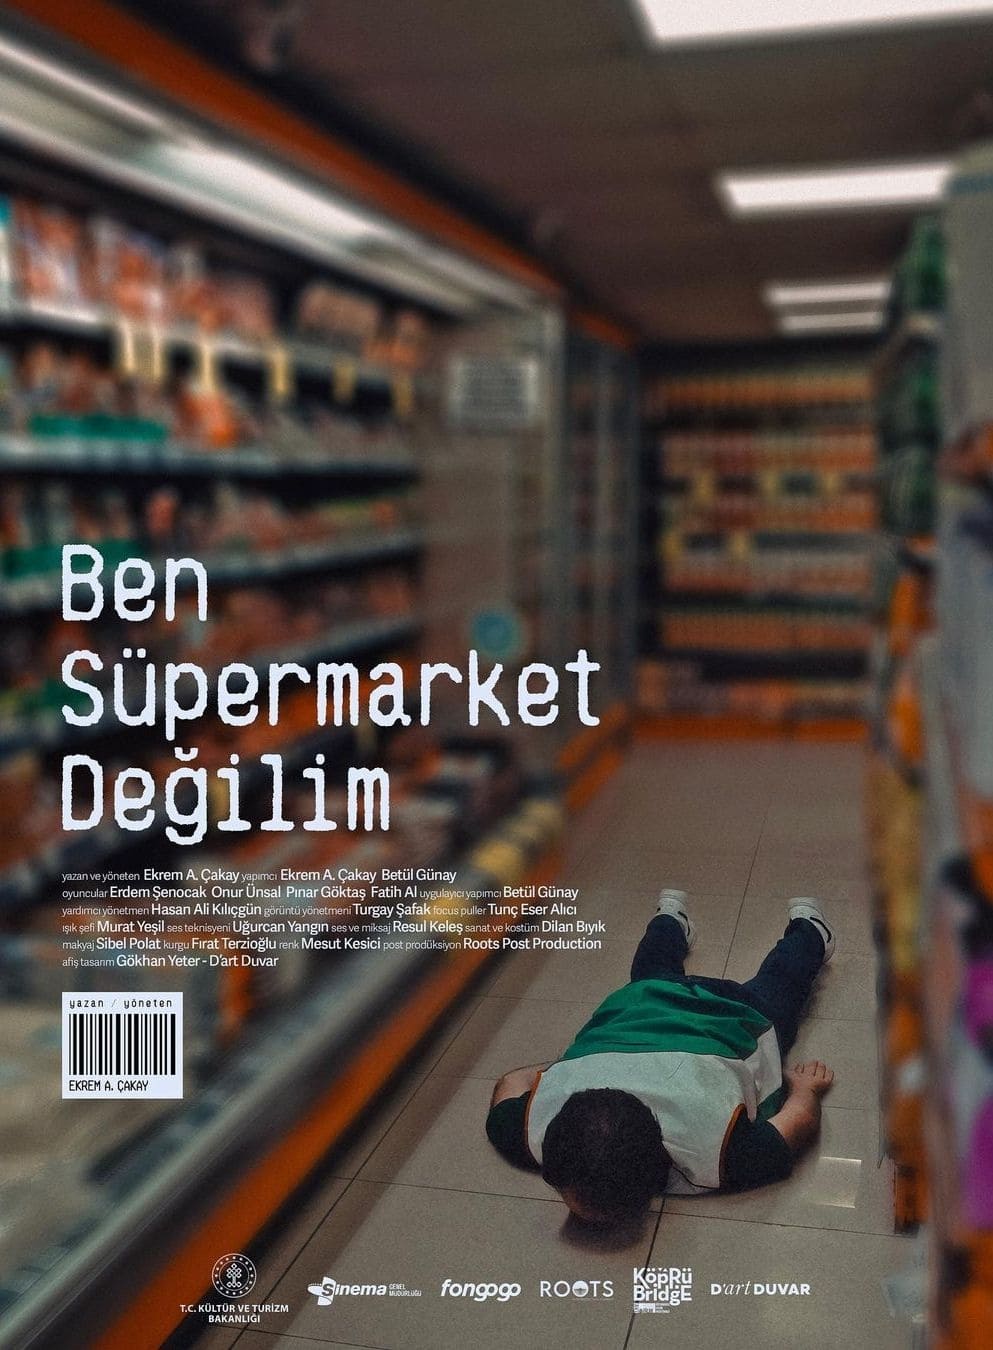 I am not Supermarket